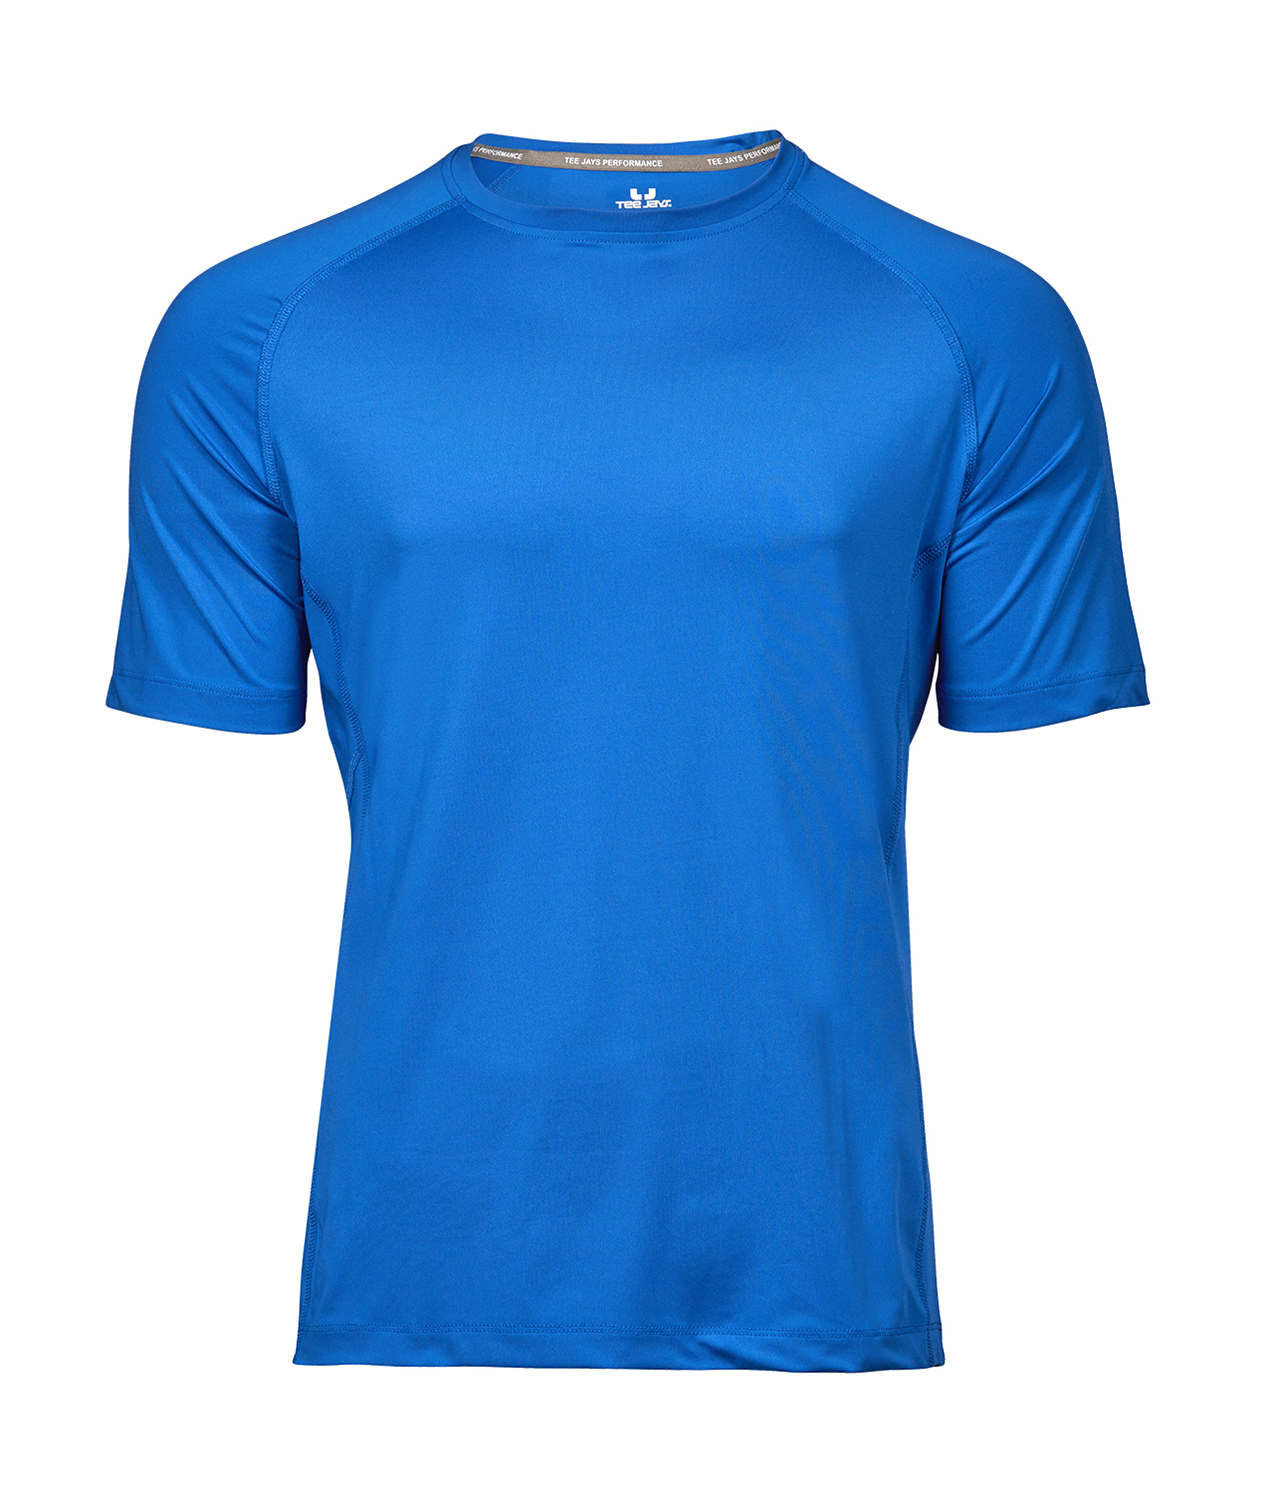 Pánské triko Cool dry Velikost: XL, Barva: Modrá